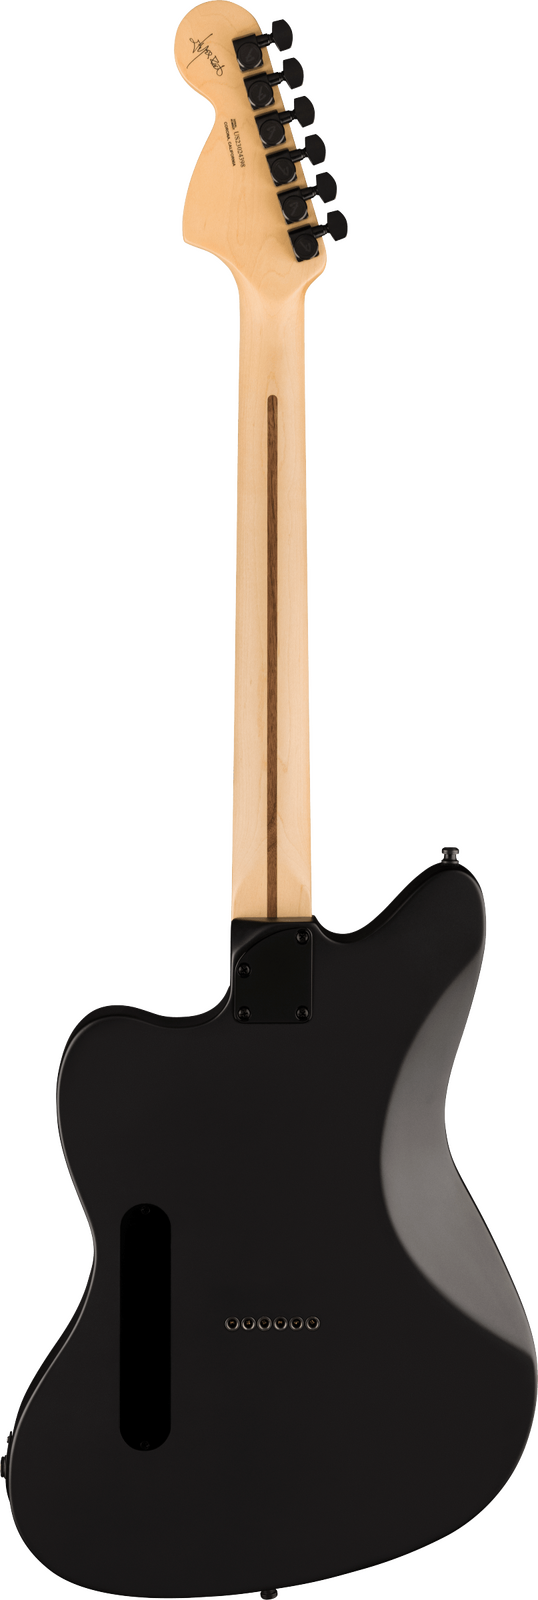 Fender Jim Root Jazzmaster Flat Black